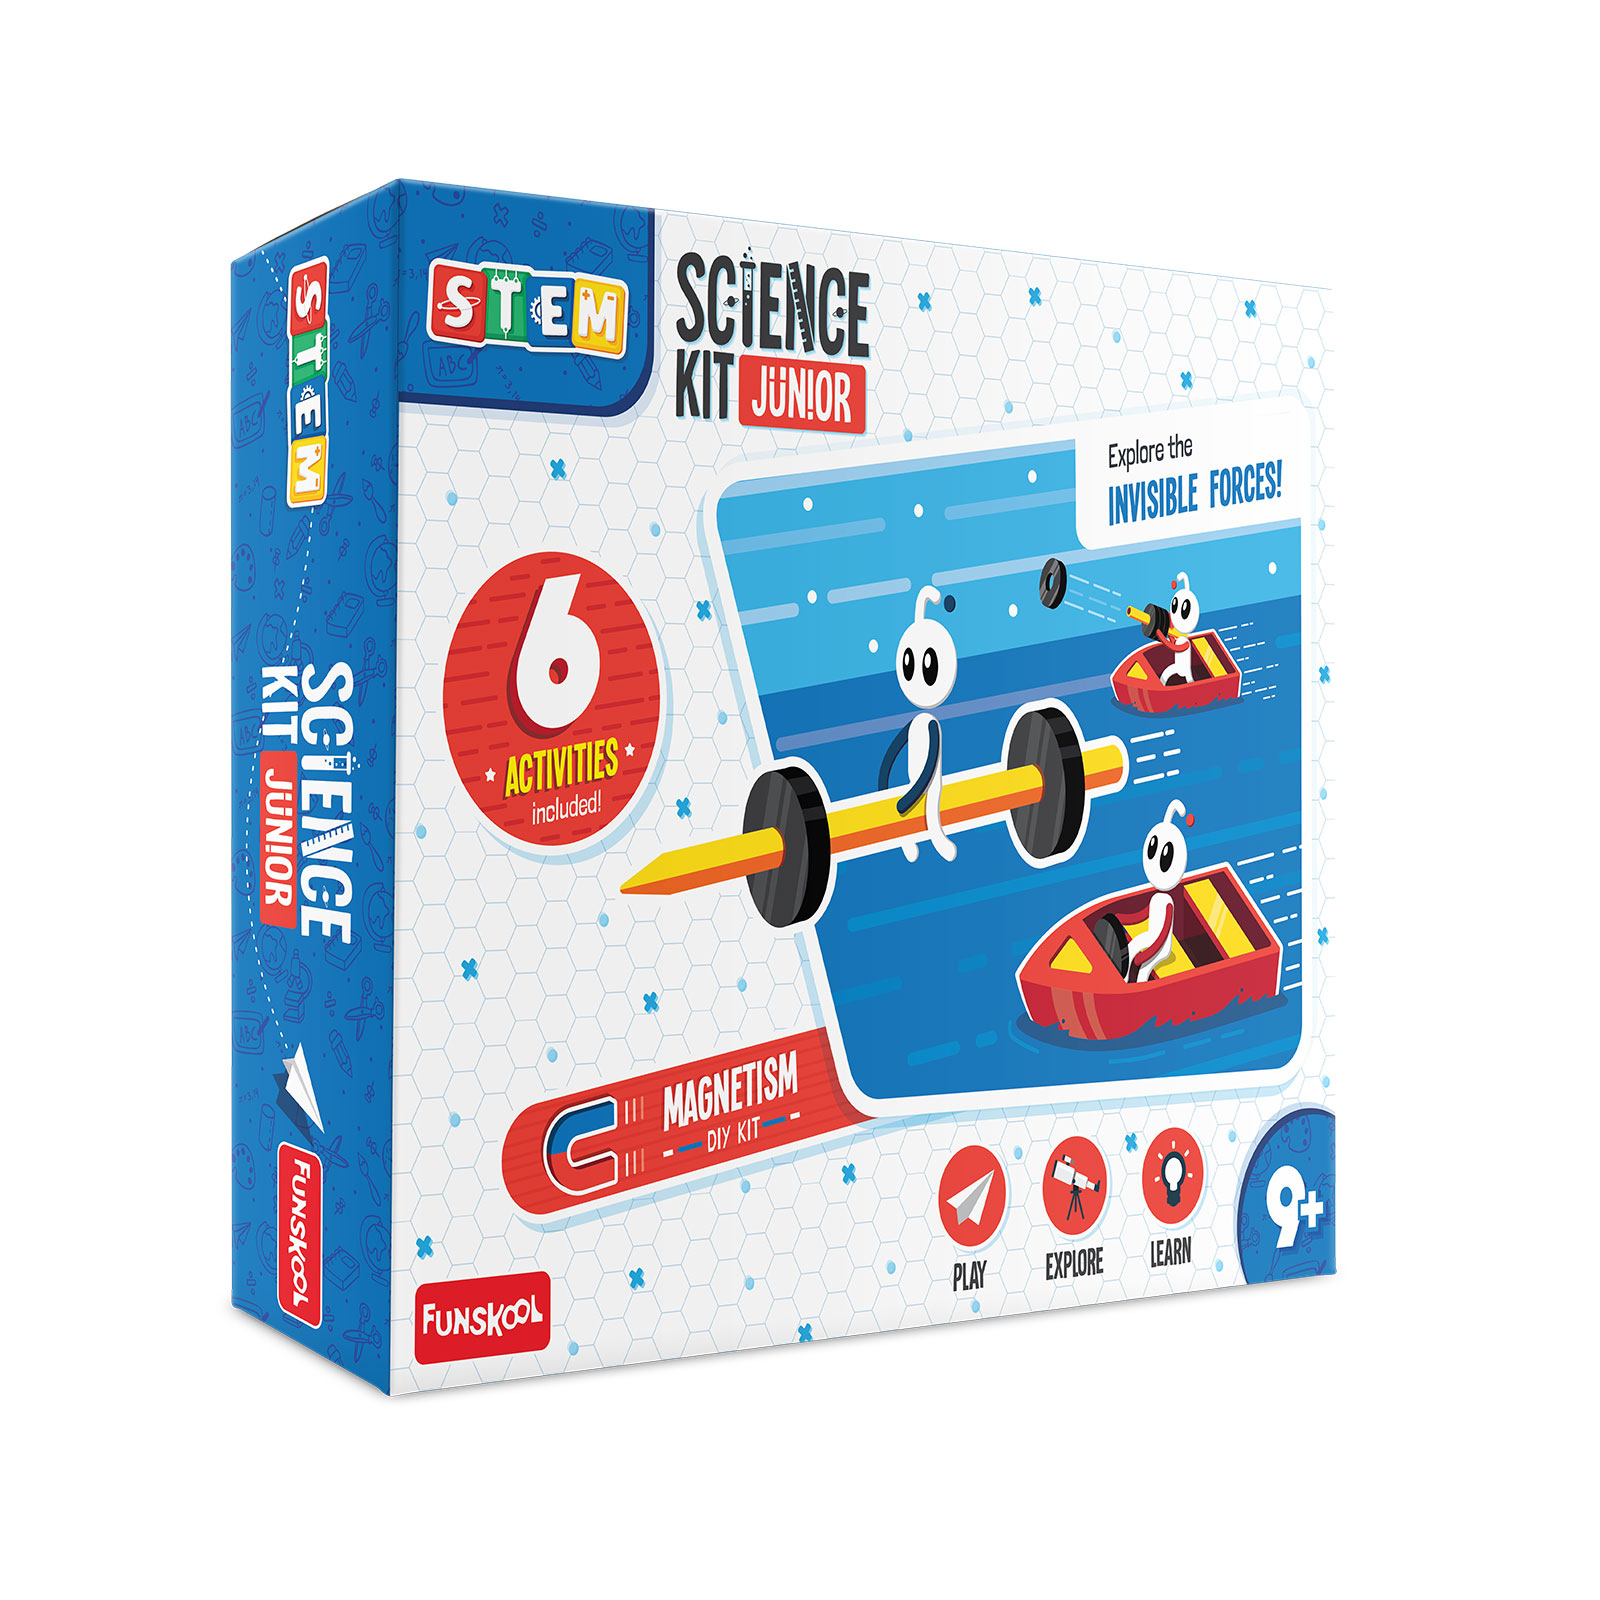 Science kit - Junior